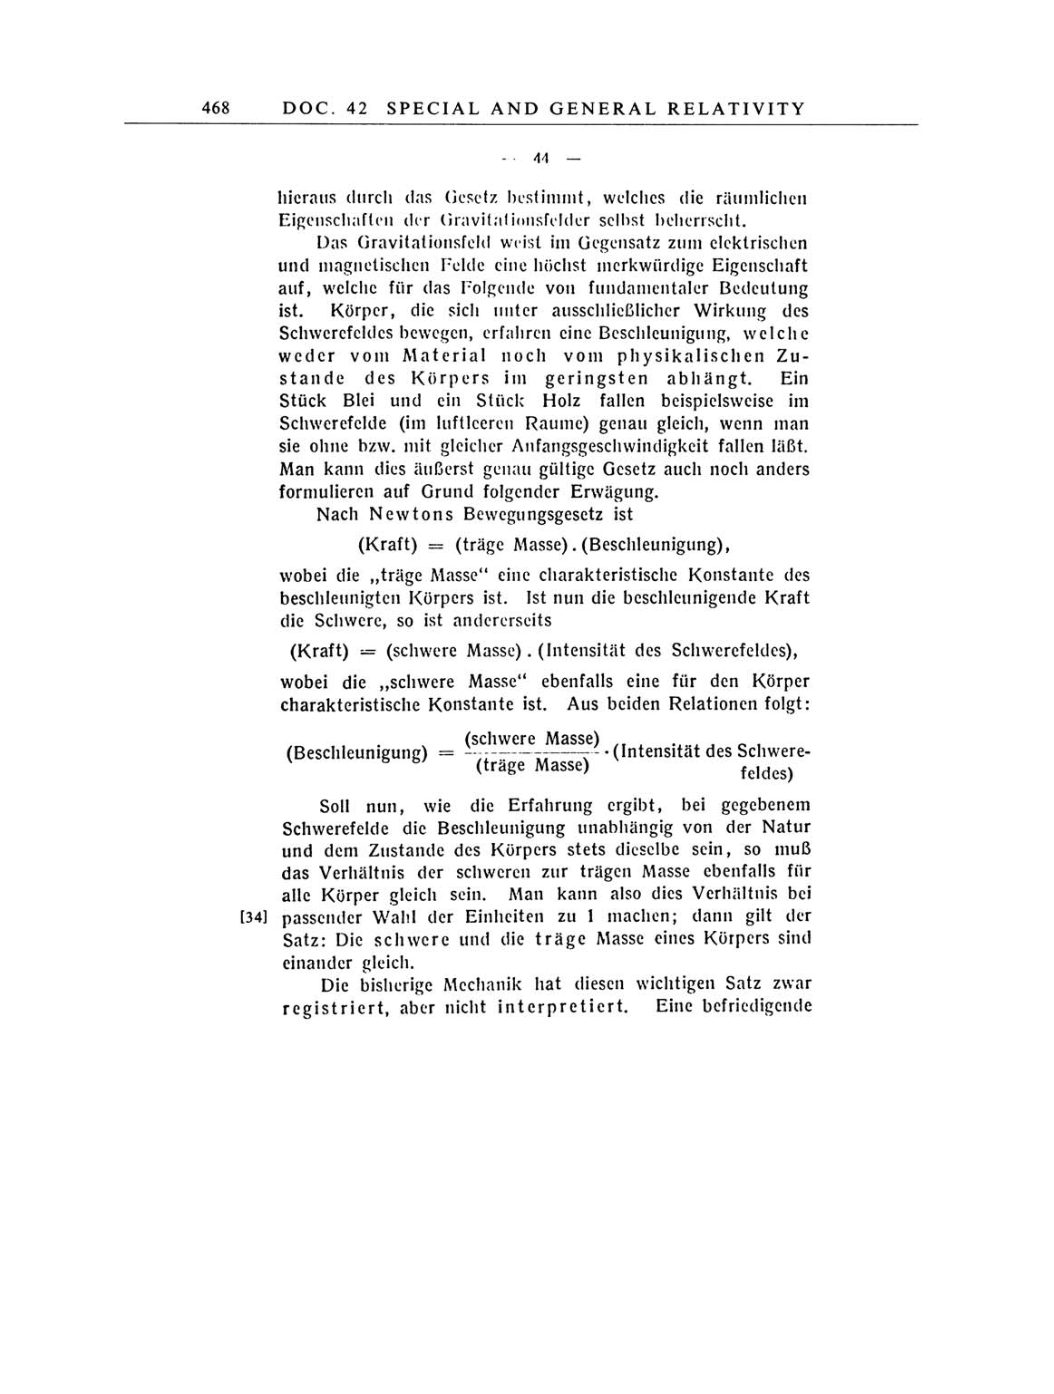 Volume 6: The Berlin Years: Writings, 1914-1917 page 468